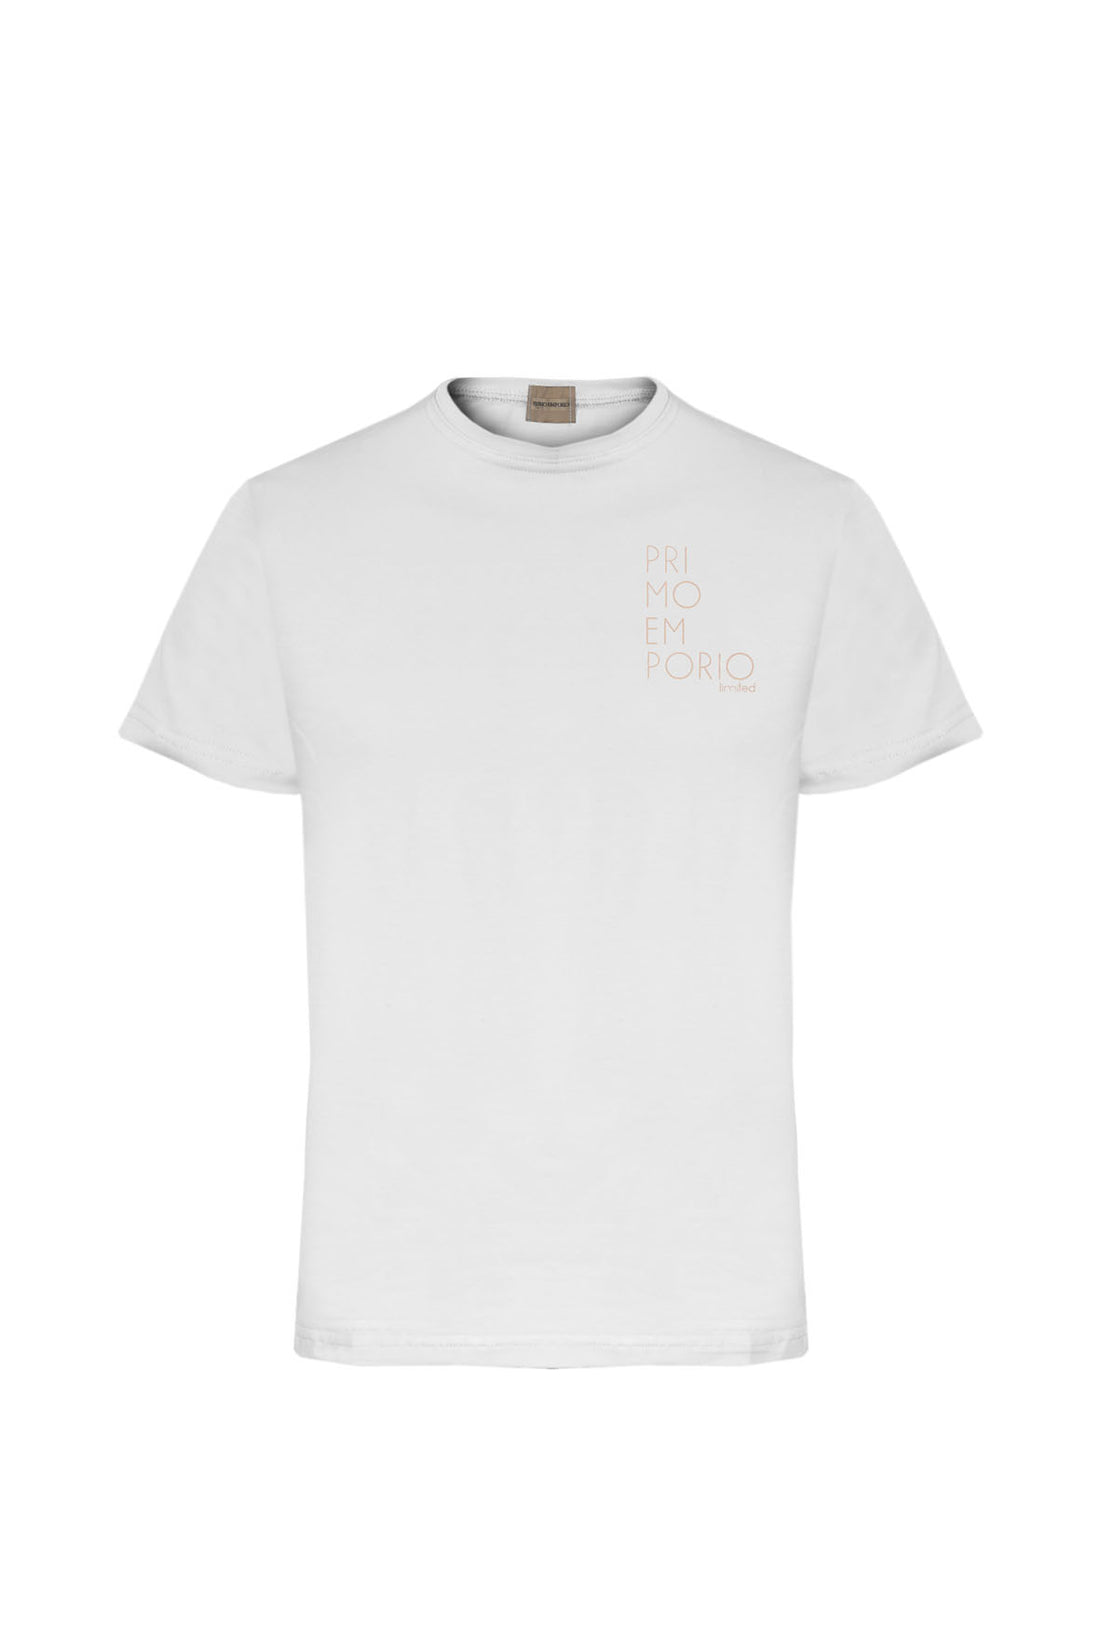 Elastic T-Shirt with Primo Emporio Chest Print - White